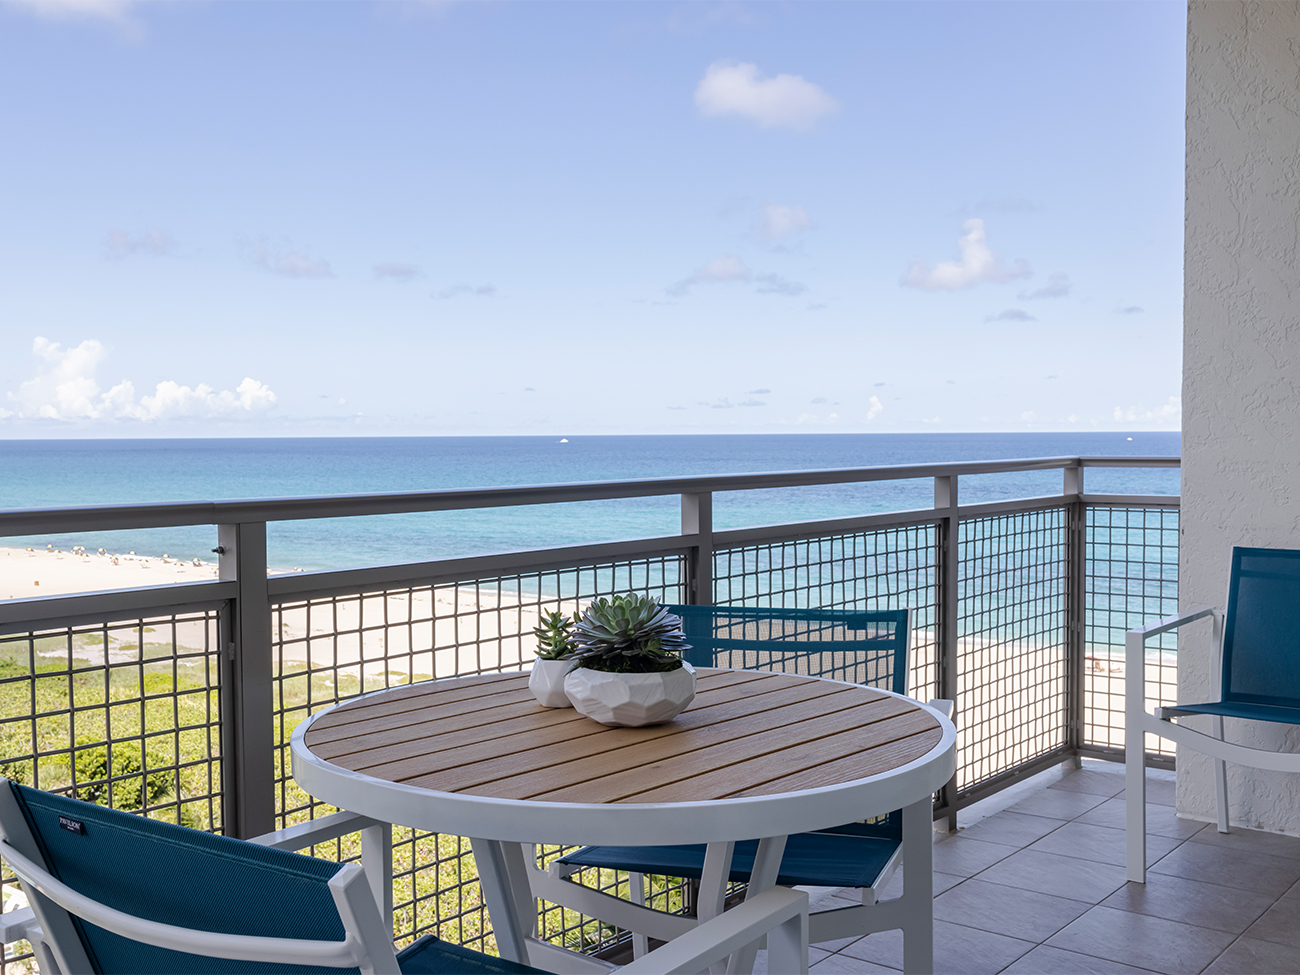 Marriott's Oceana Palms Ocean View Balcony. Marriott's Oceana Palms is located in Riviera Beach, Florida United States.